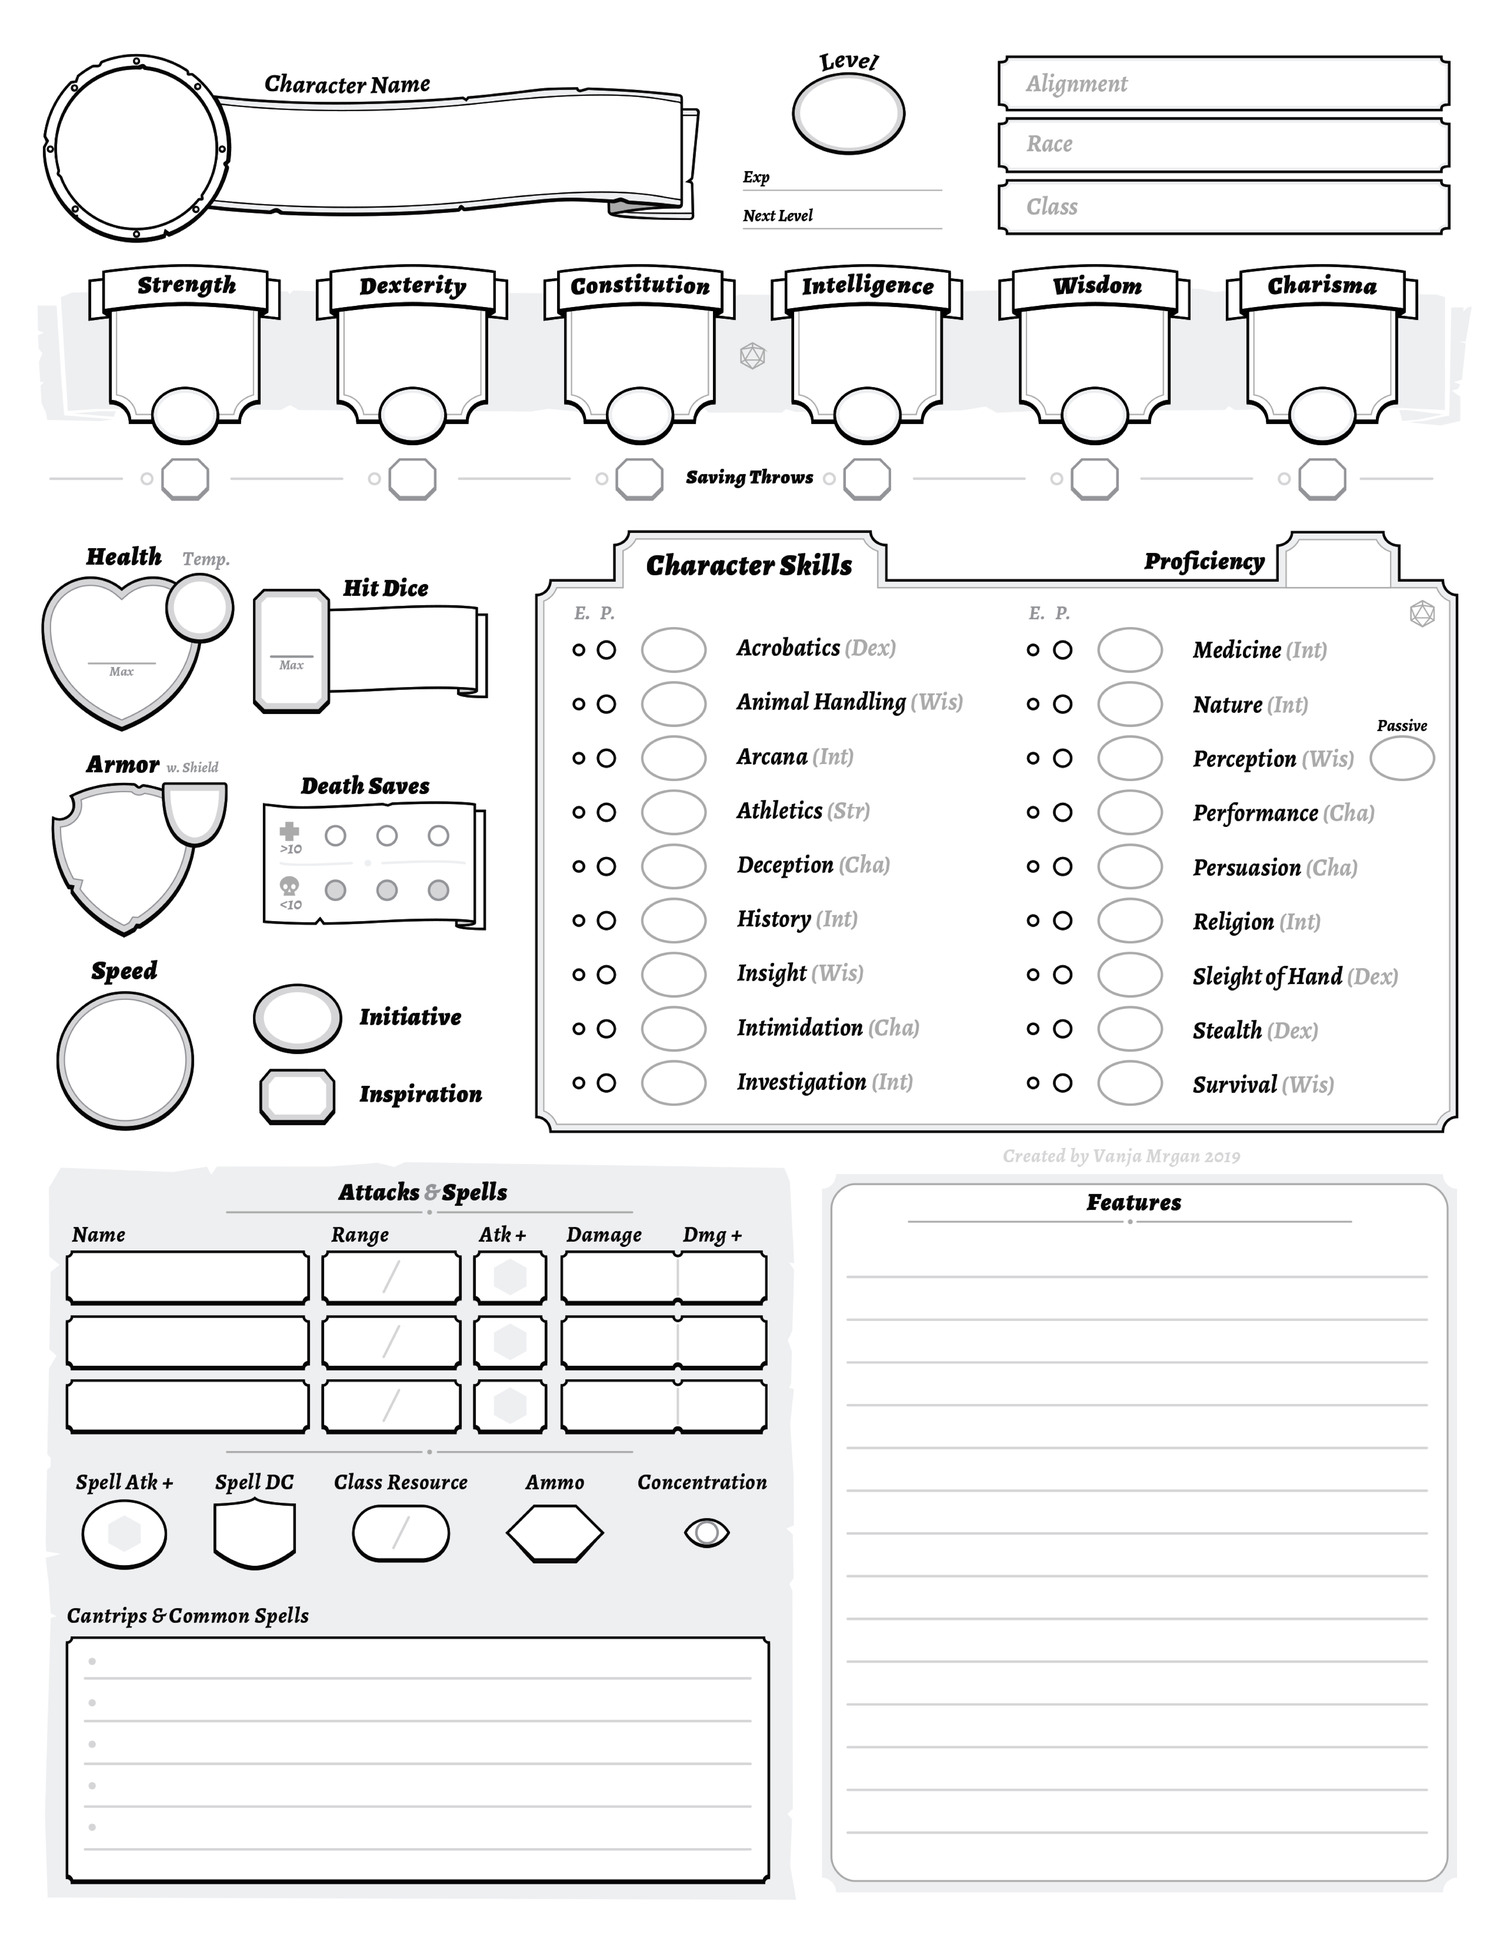 Character Sheet Print Version_v4.pdf DocDroid